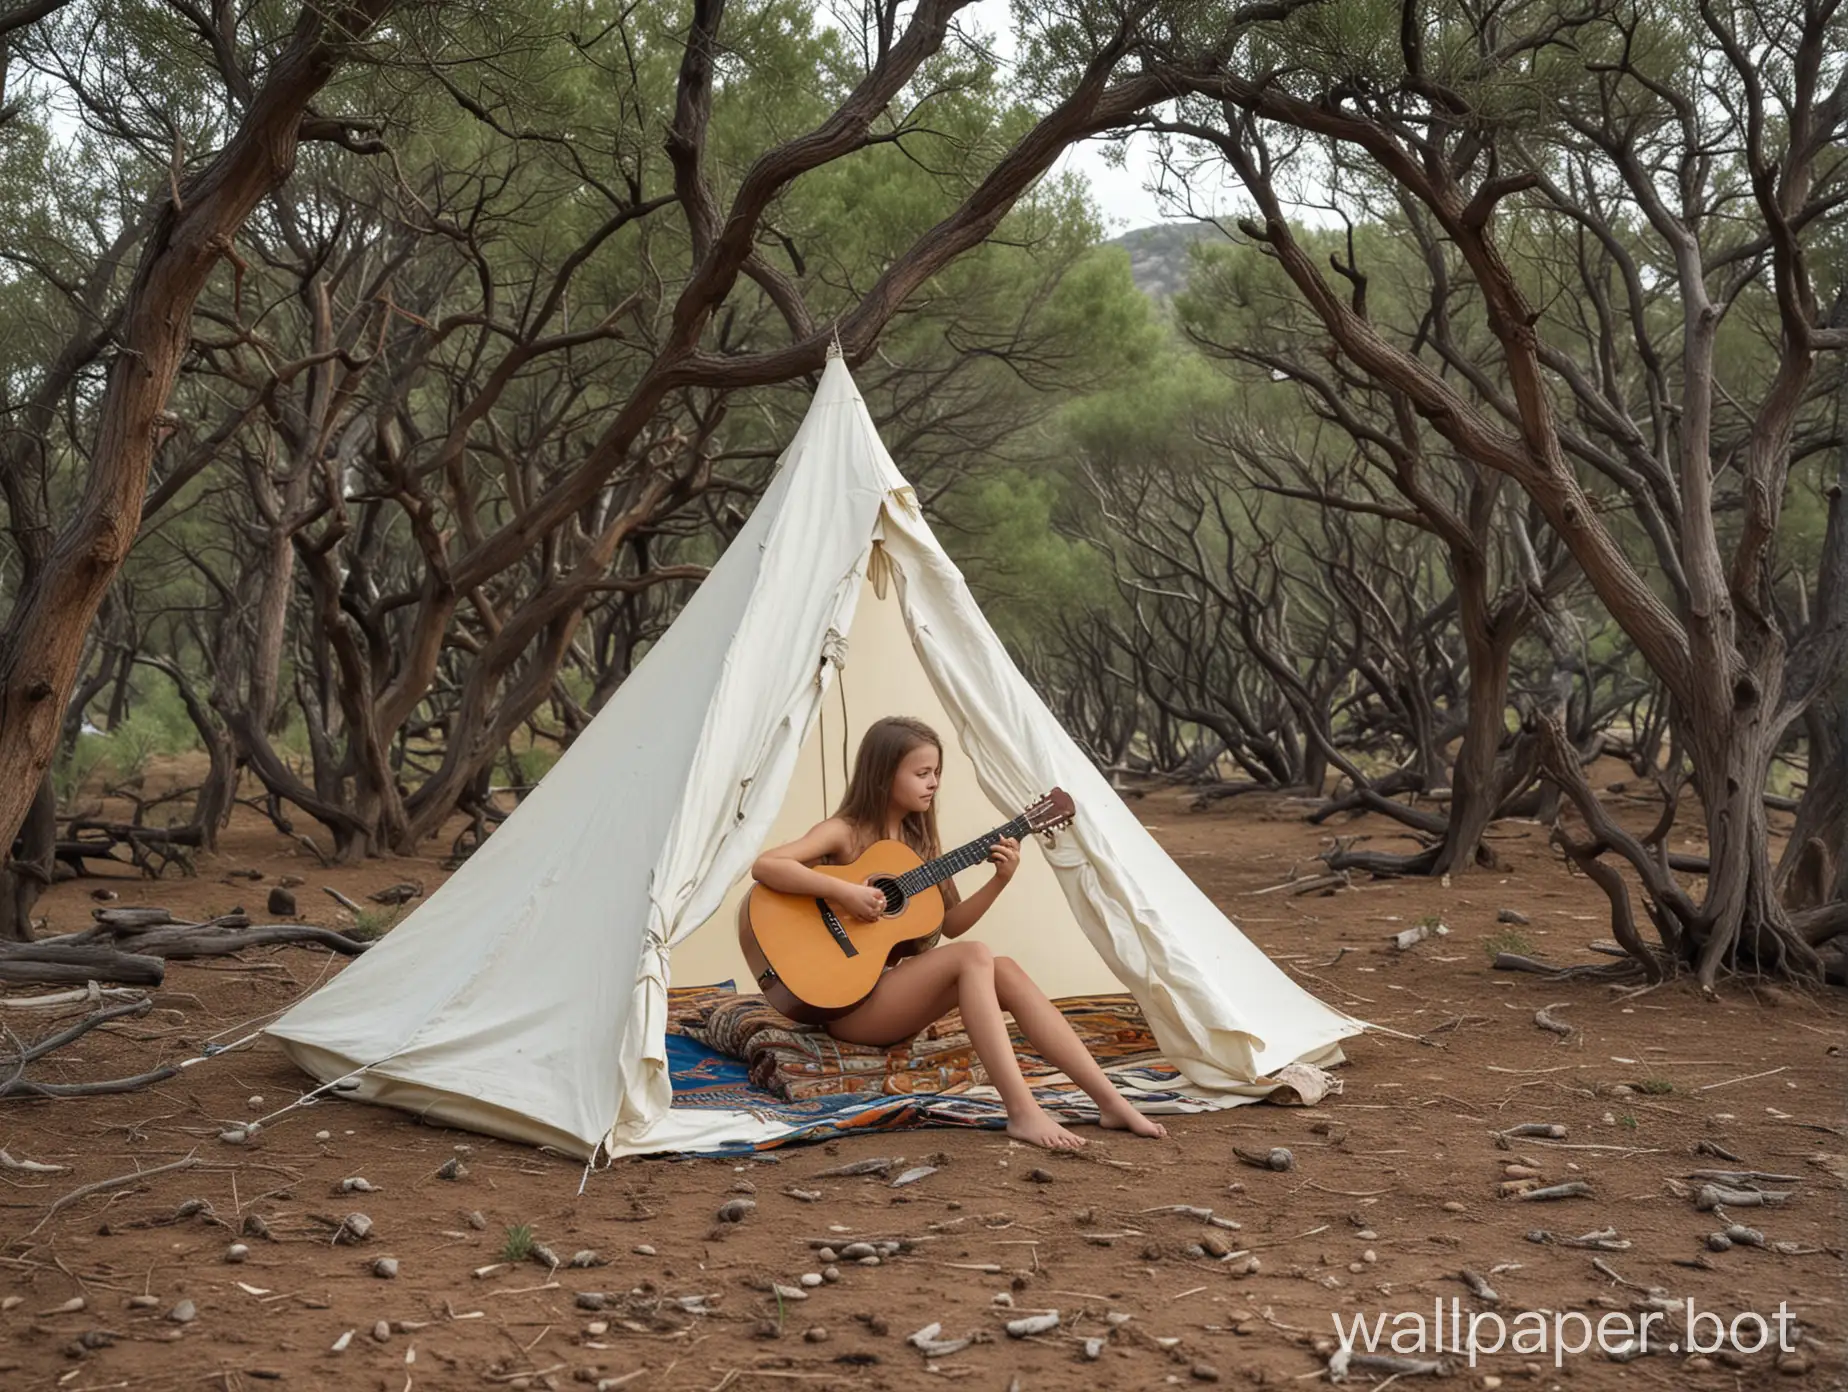 Crimea, sea, oaks, juniper, naked 10-year-old girl, full-length, tent, guitar, distant sea view